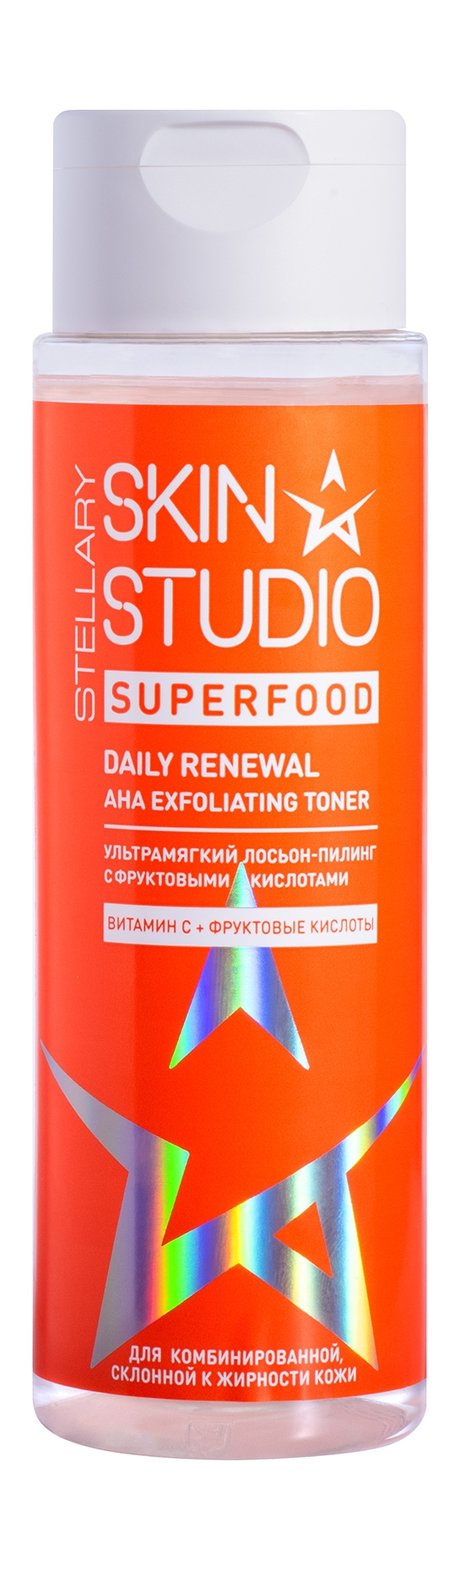 stellary skin studio superfood daily renewal aha exfoliating toner